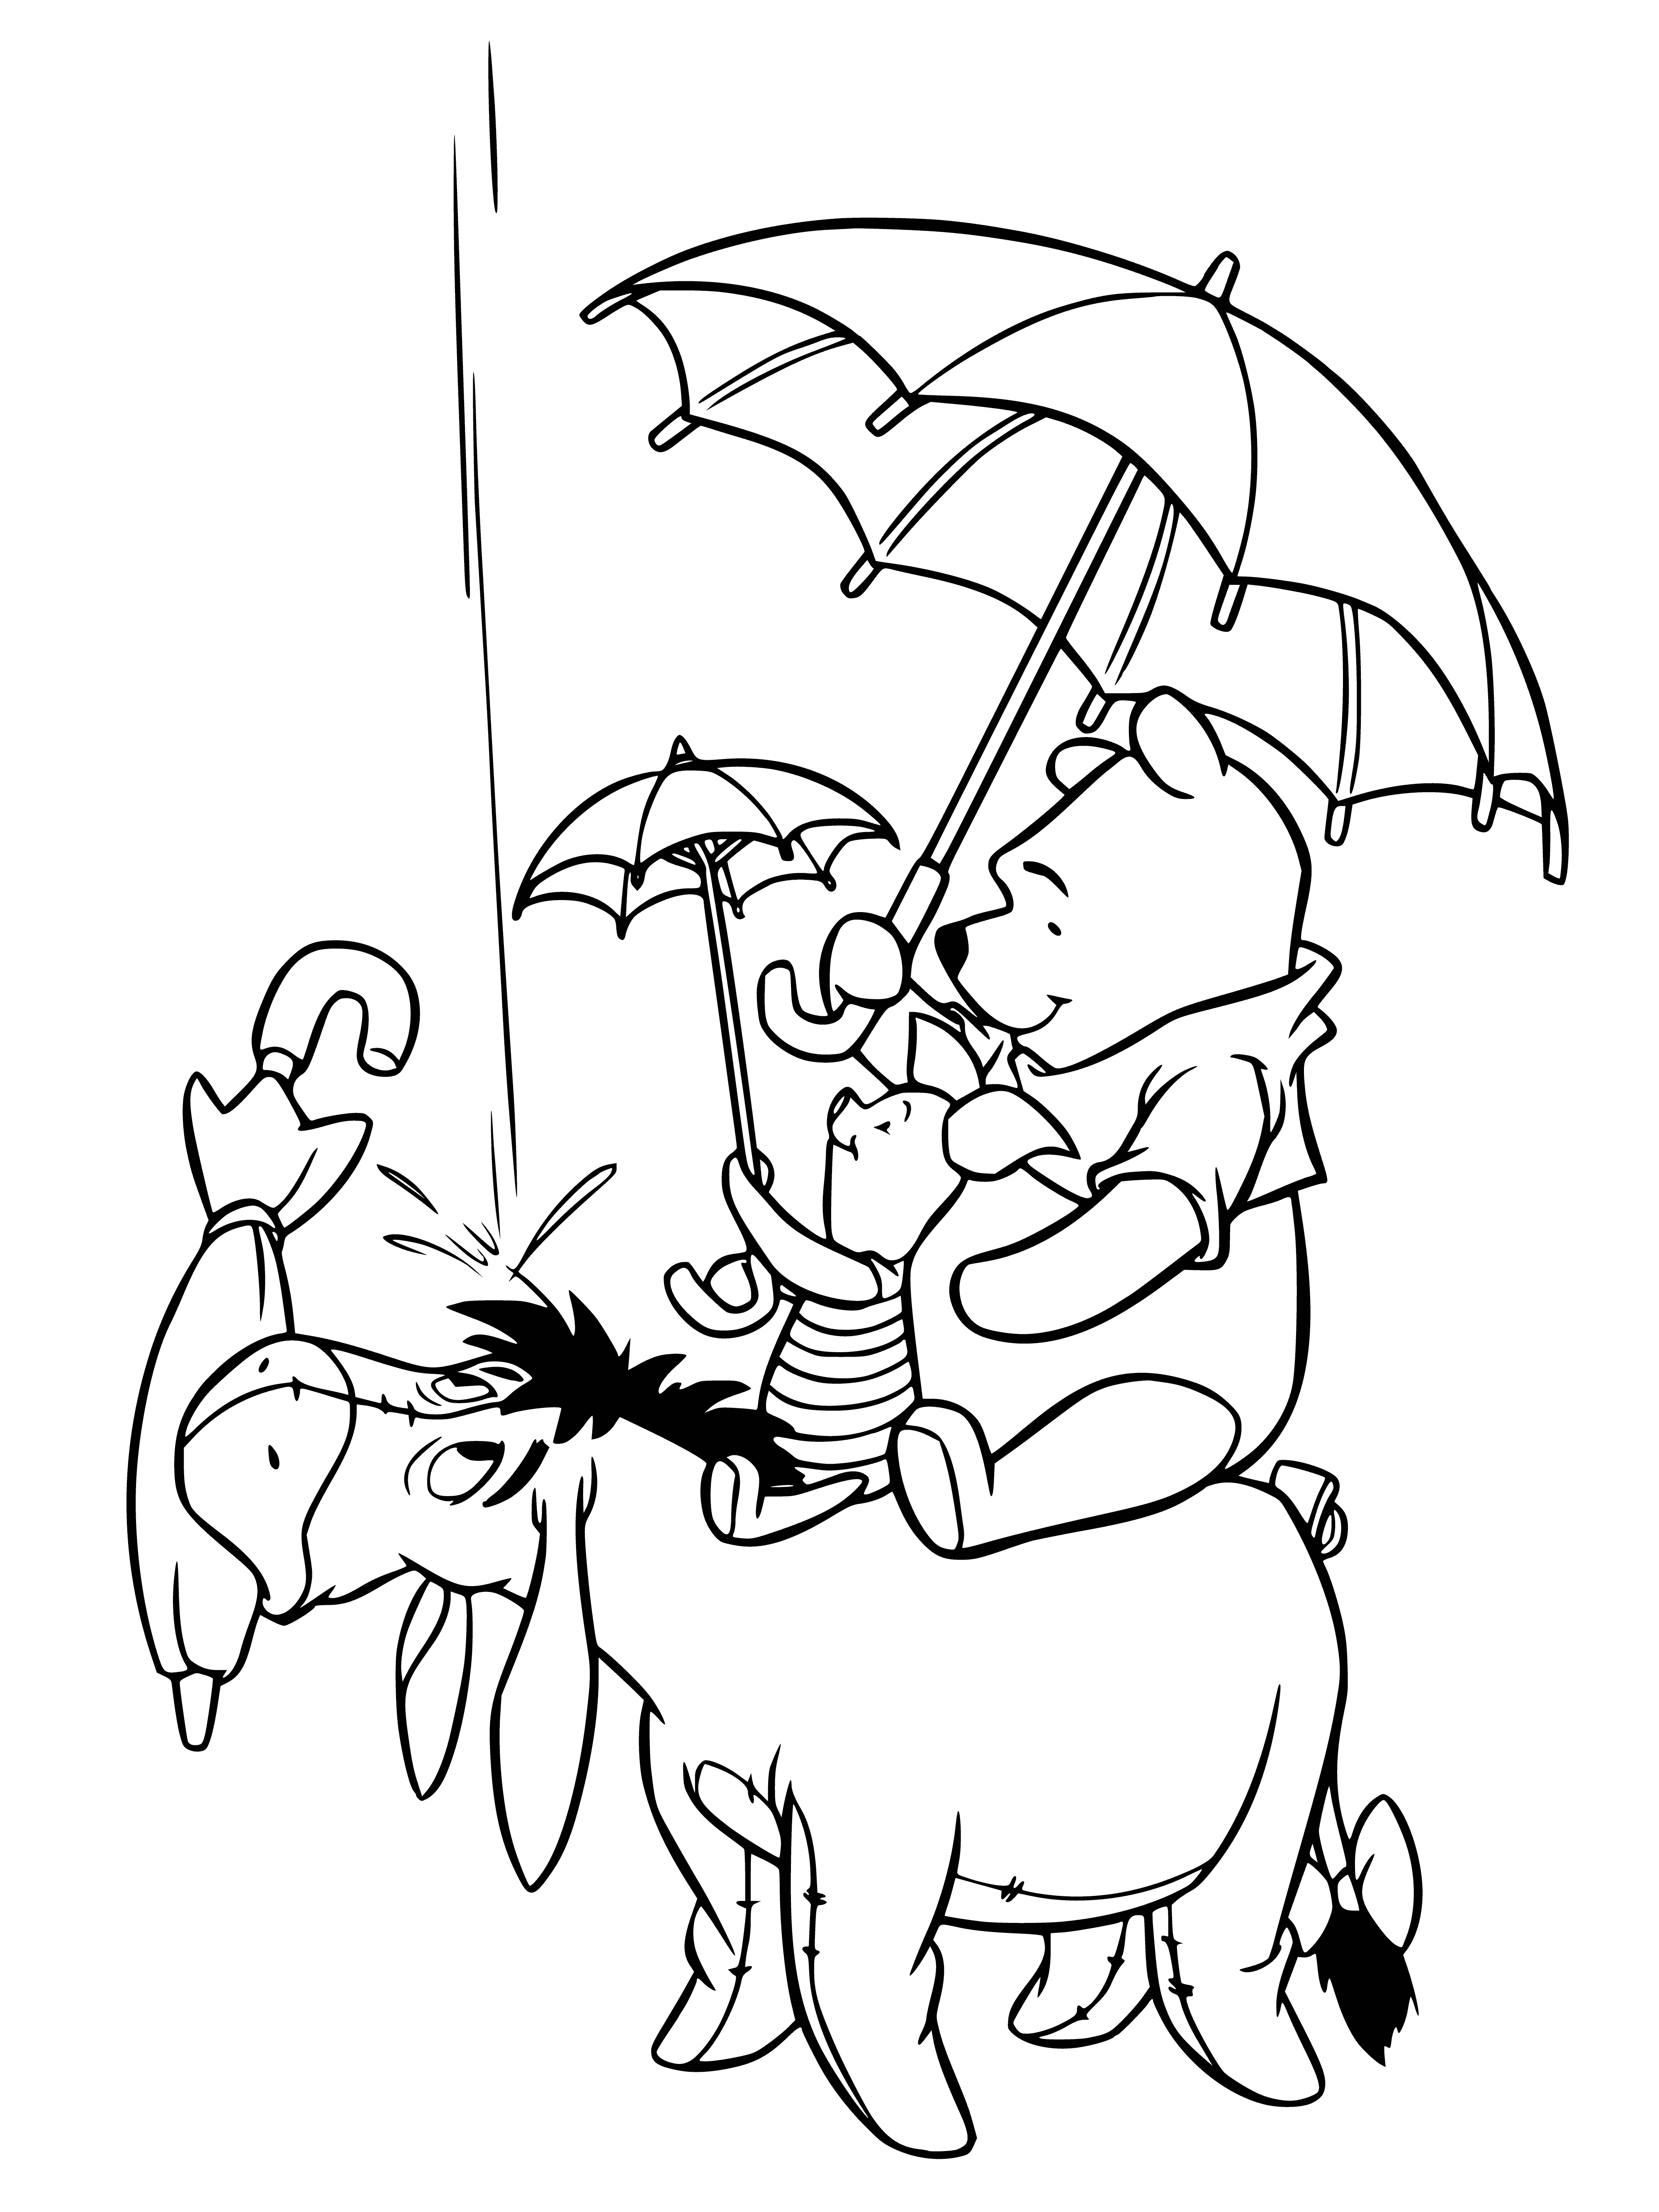 Under the umbrella coloring page